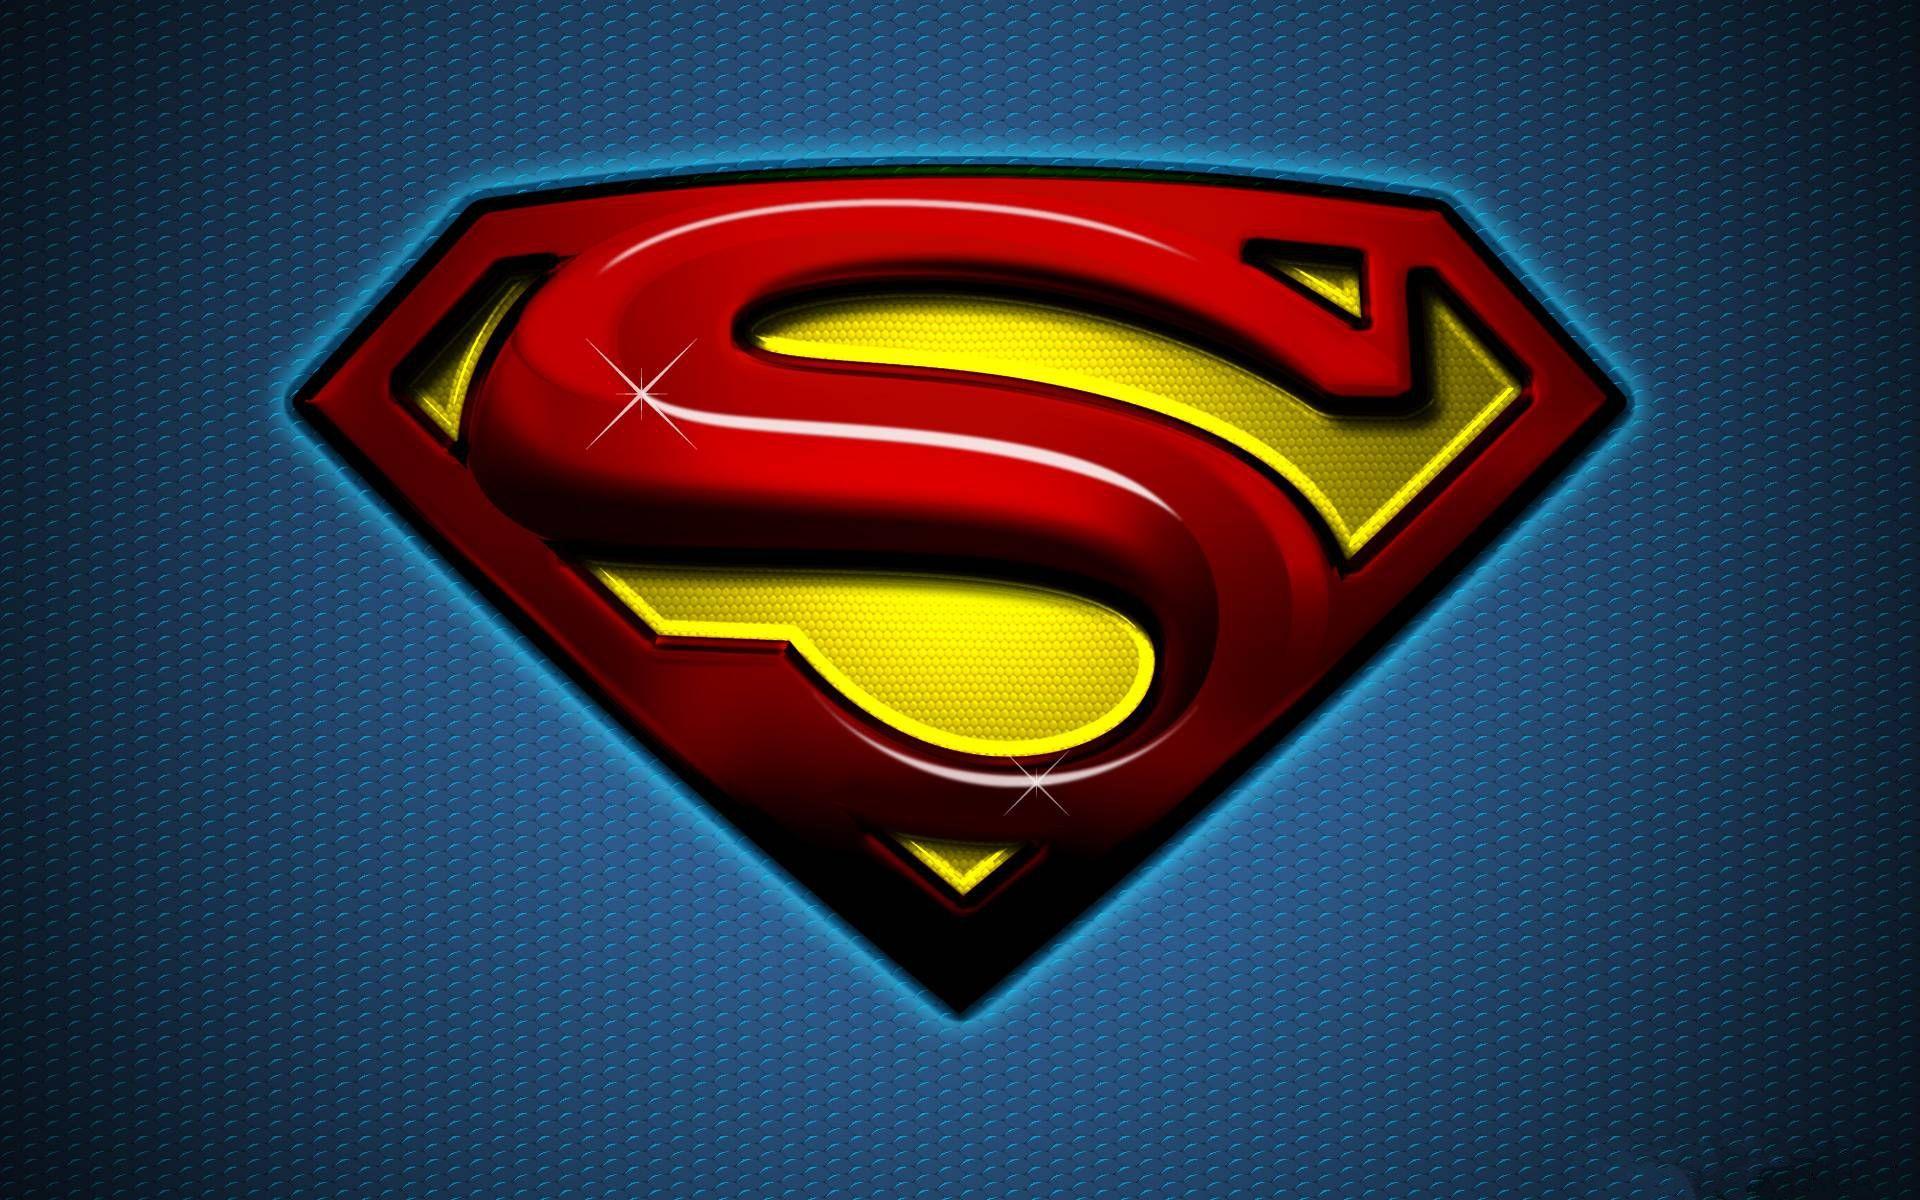 Wallpaper.wiki Superman Logo IPad Wallpaper HD PIC WPE003932